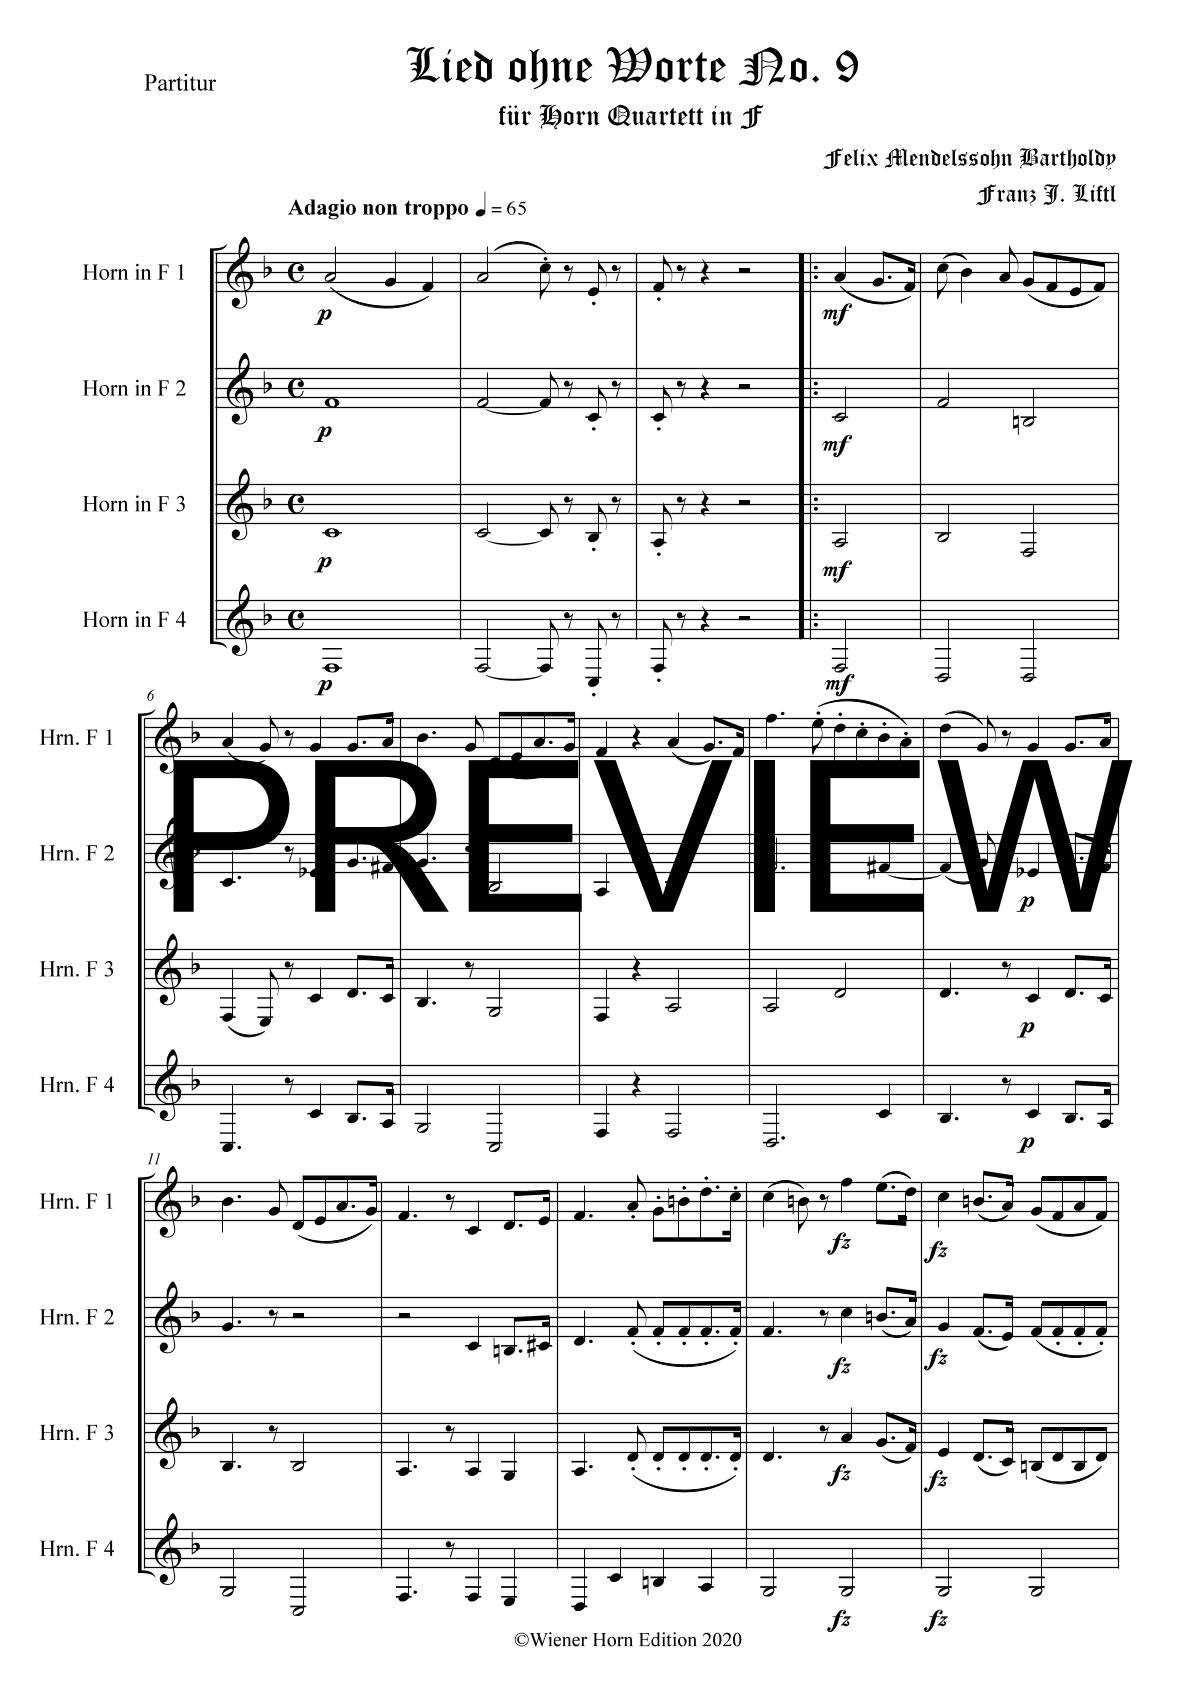 Lied ohne Worte No. 9 - Felix Mendelssohn Bartholdy - für Horn Quartett in F - Arr. Franz J. Liftl